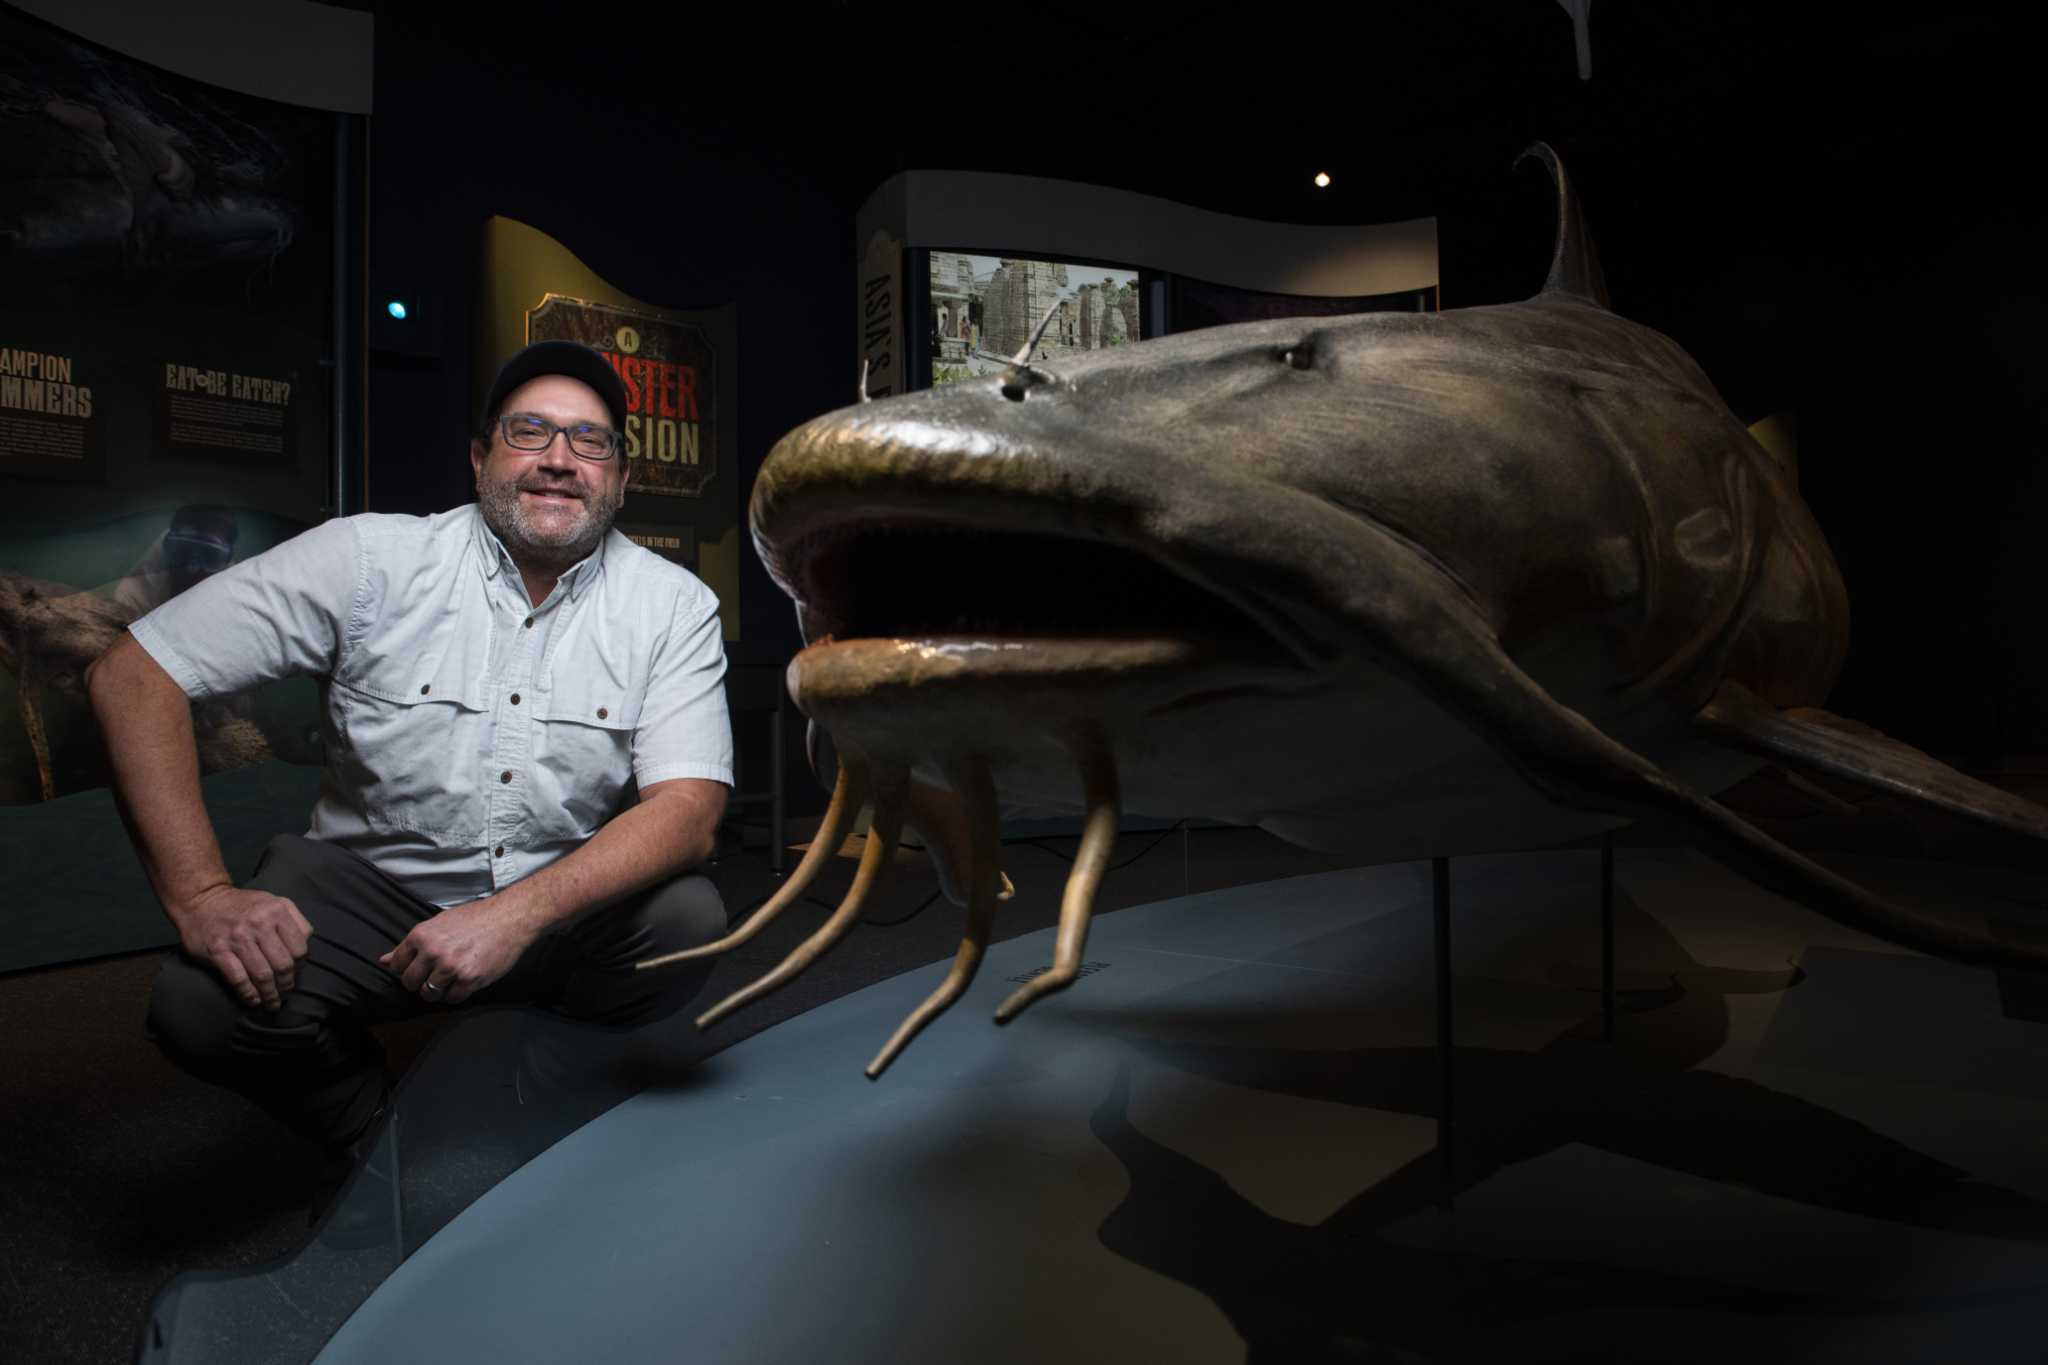 National Geographics giant fish San Antonio exhibit ending soon photo